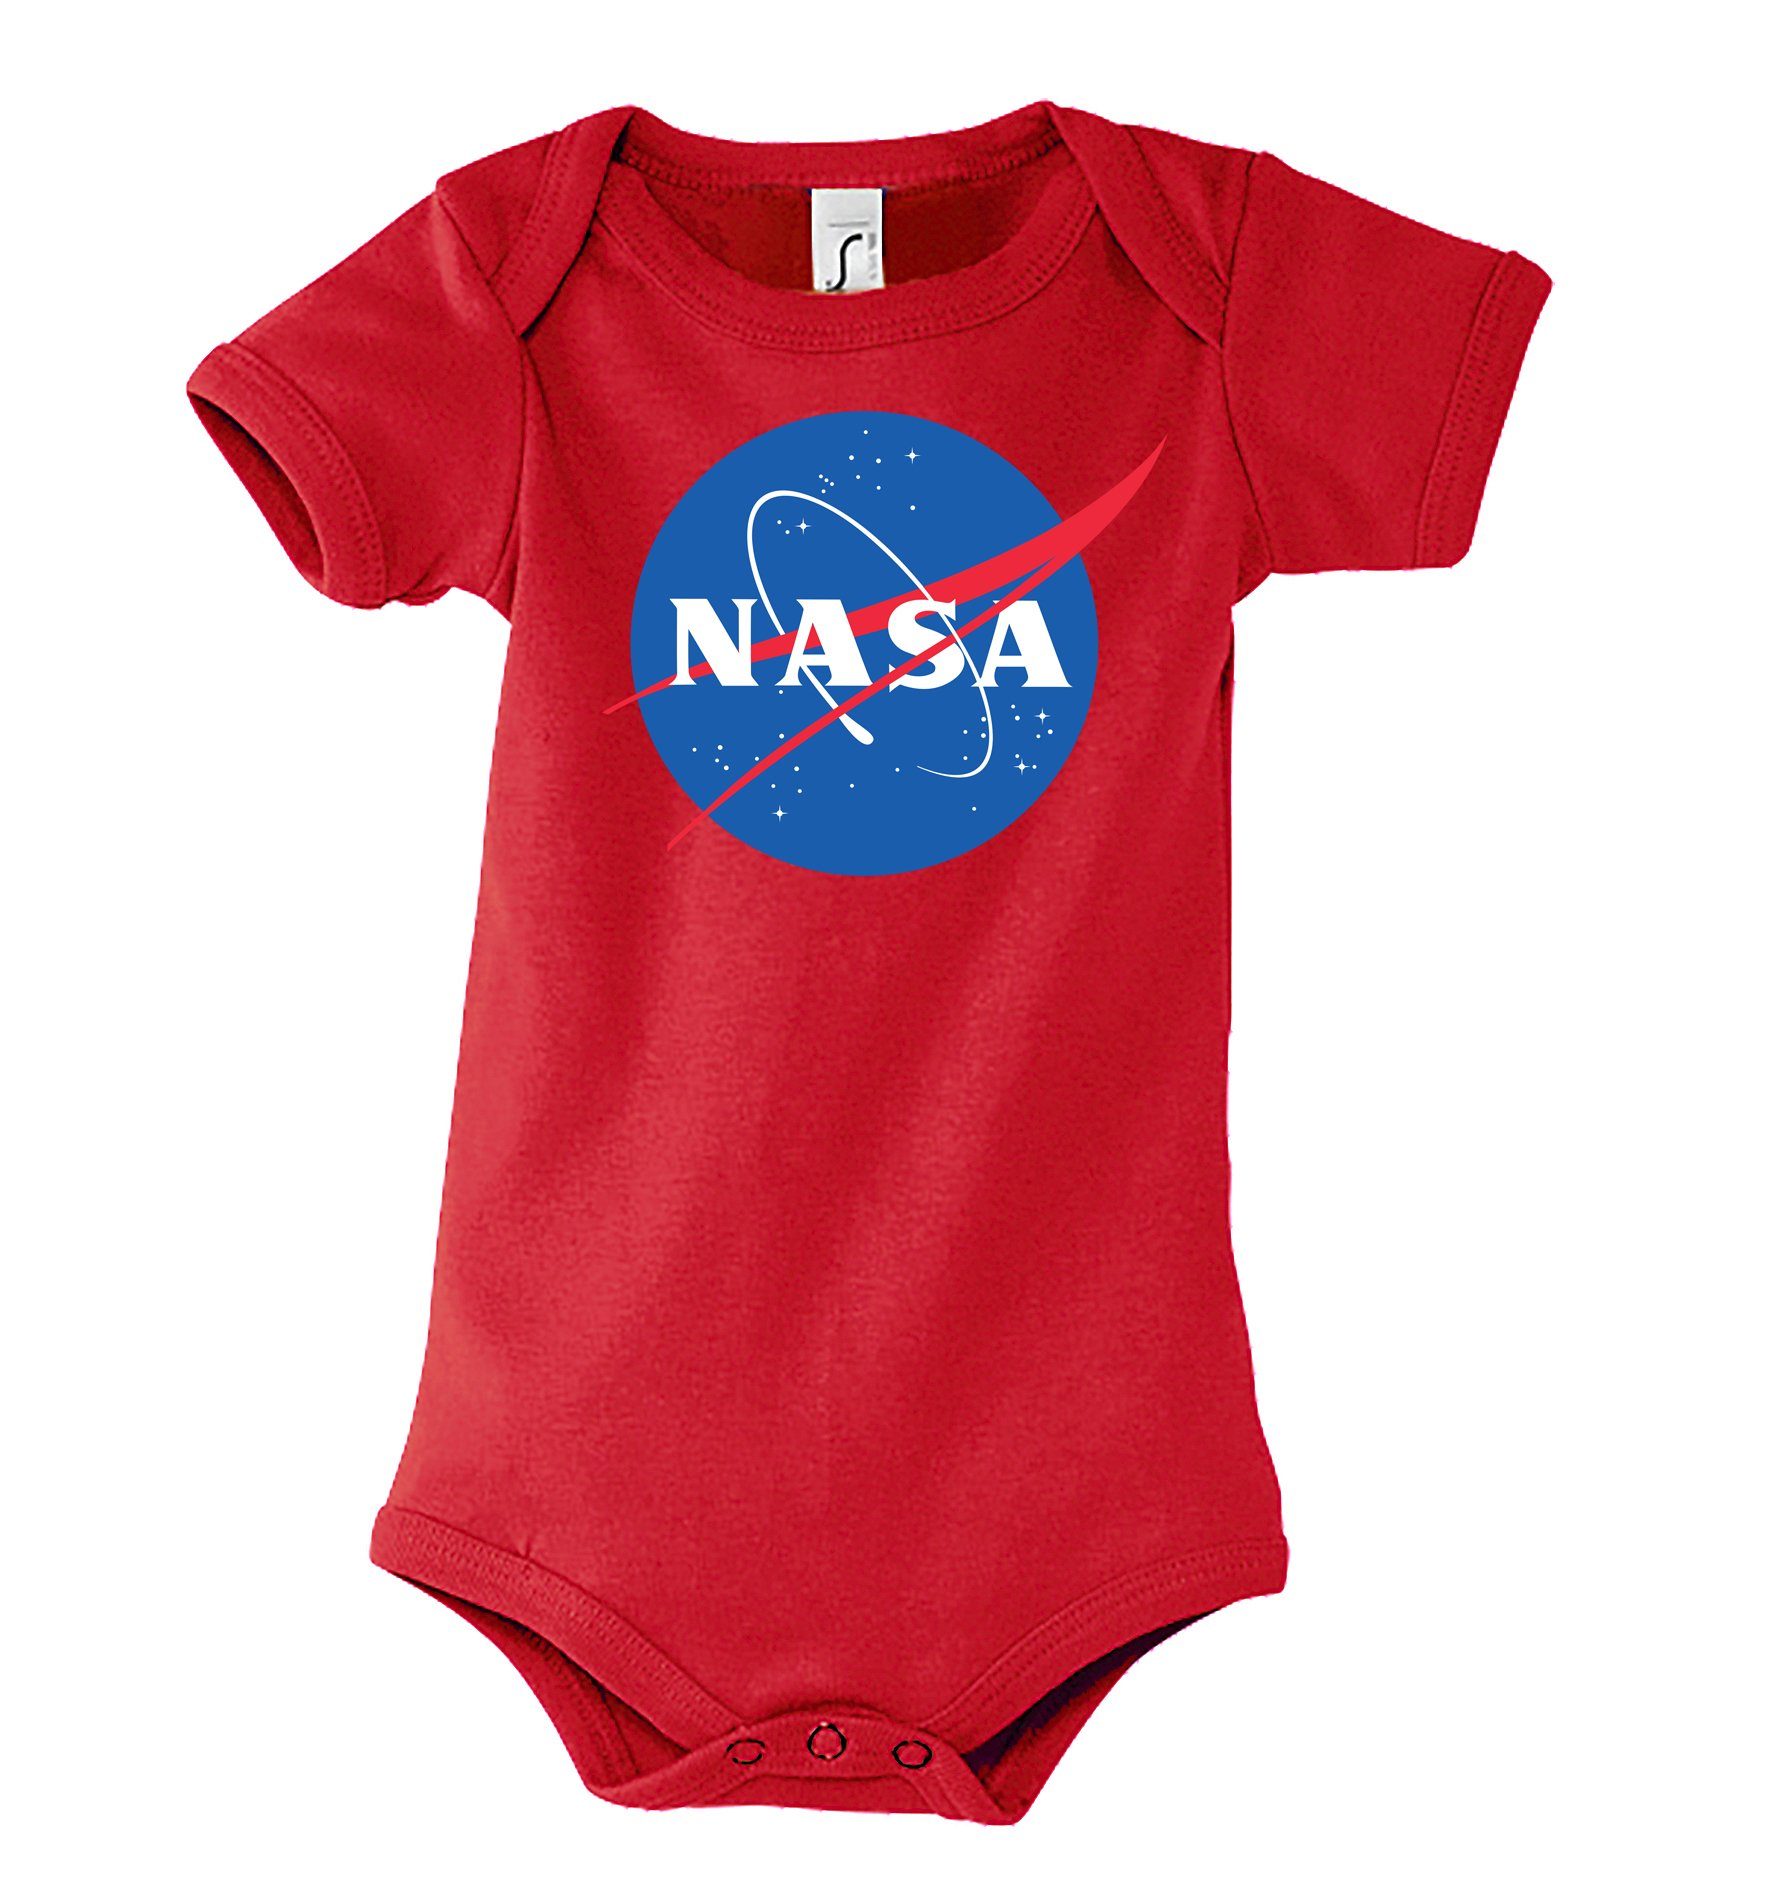 Youth Designz Kurzarmbody Baby Body Strampler NASA mit niedlichem Frontprint Rot